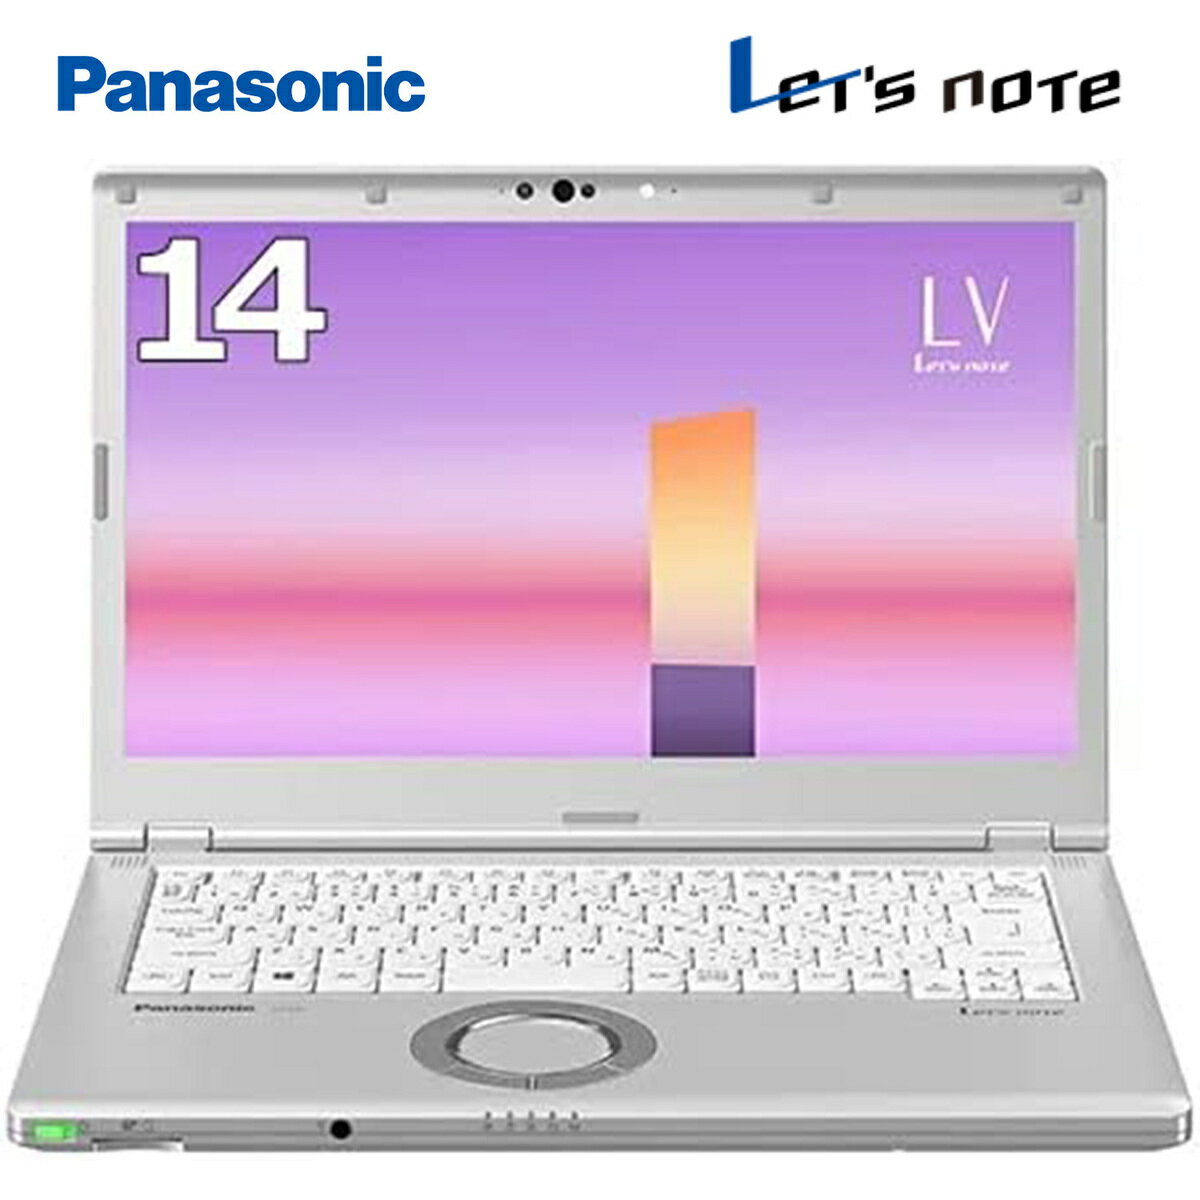 Panasonic Let’s note CF-LV1UFLVS LV1シリーズ Wi-Fi6対応 Windows10 Pro 64bit Corei5 16GB SSD 256GB 高速無線LAN IEEE802.11 Bluetooth 5.1 LTE 顔認証対応 webカメラ ステレオスピーカー マイク 日本語キーボード 14.0型 フルHD TFTカラー液晶 ノートパソコン (08)